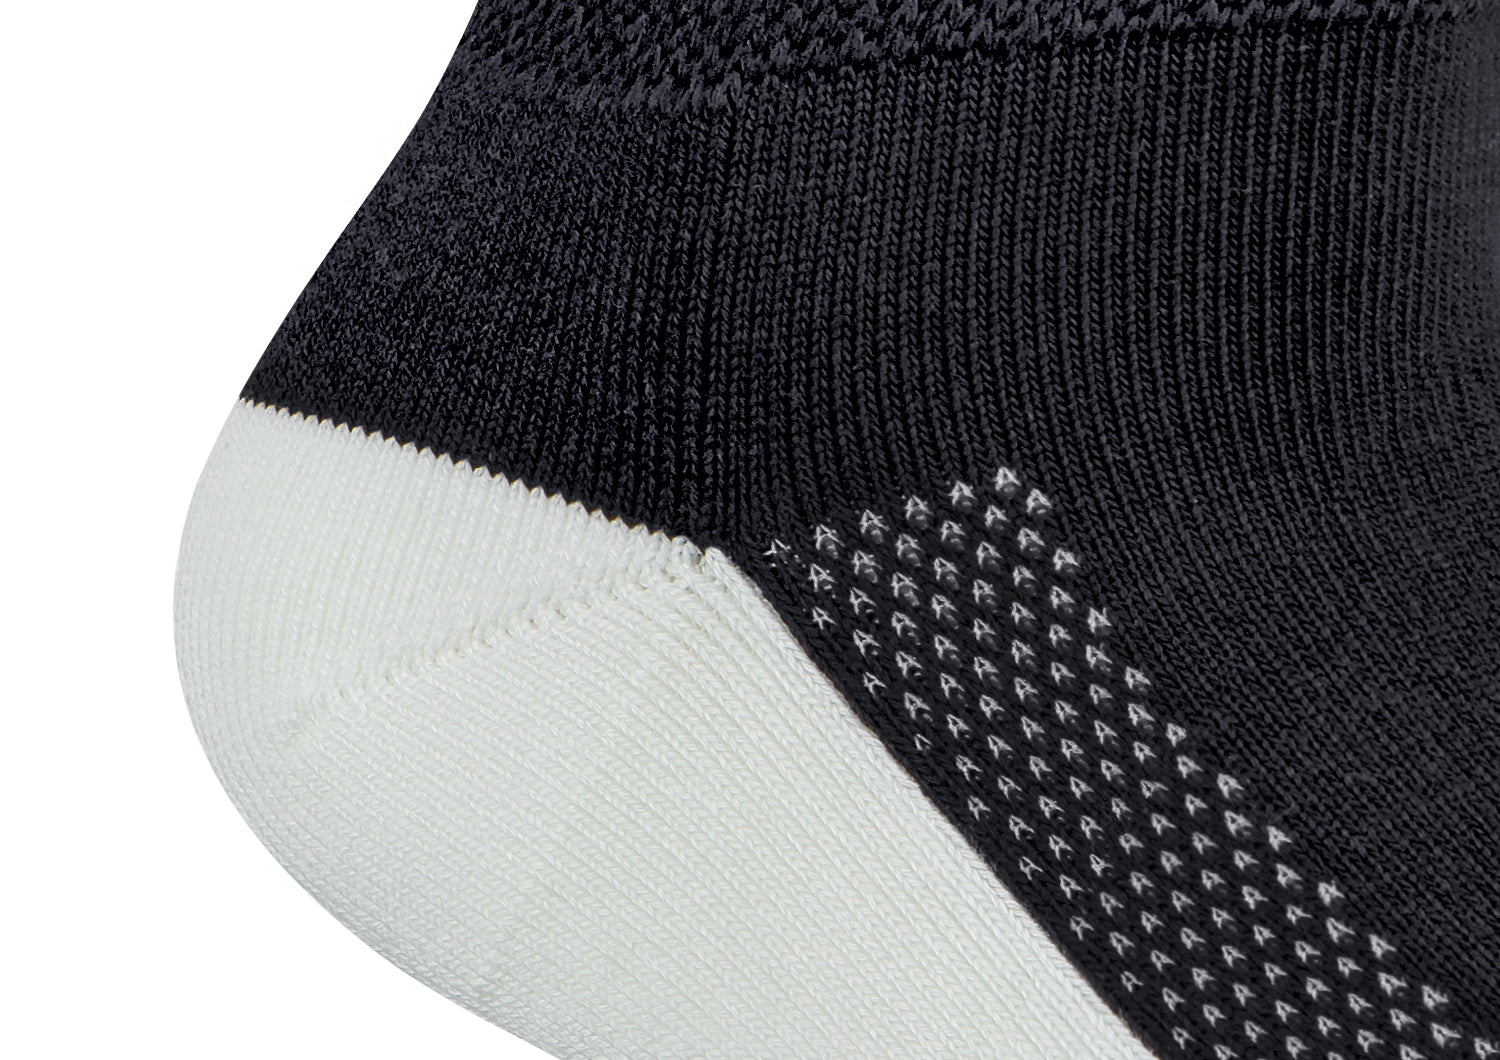 Padded Sole Diabetic Socks - Black